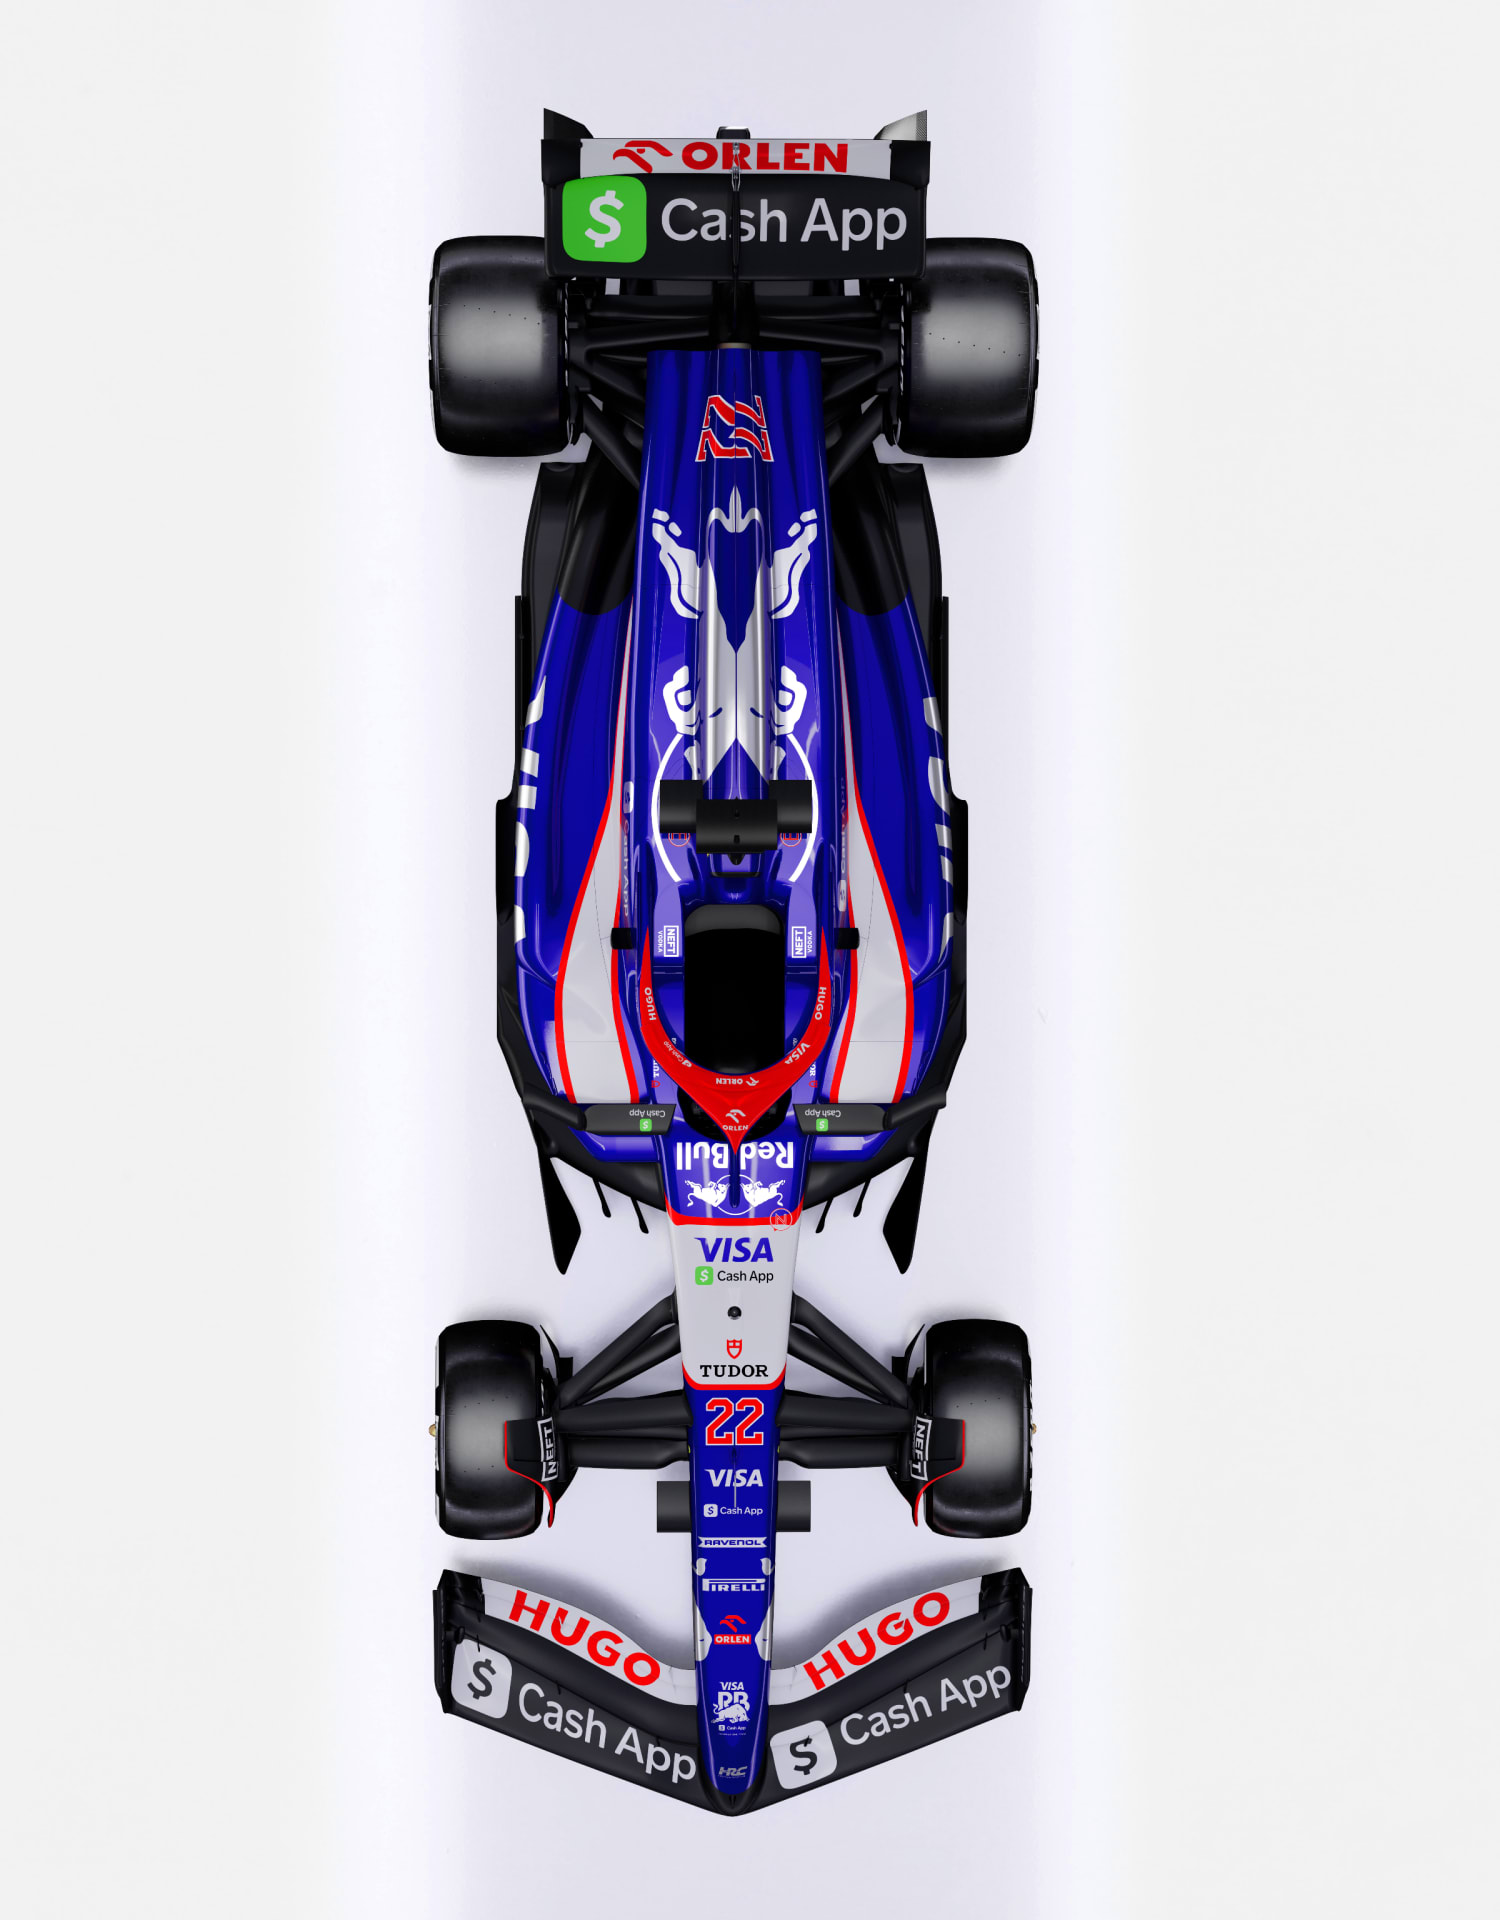 Visa Cash App RB Formula One Team race car